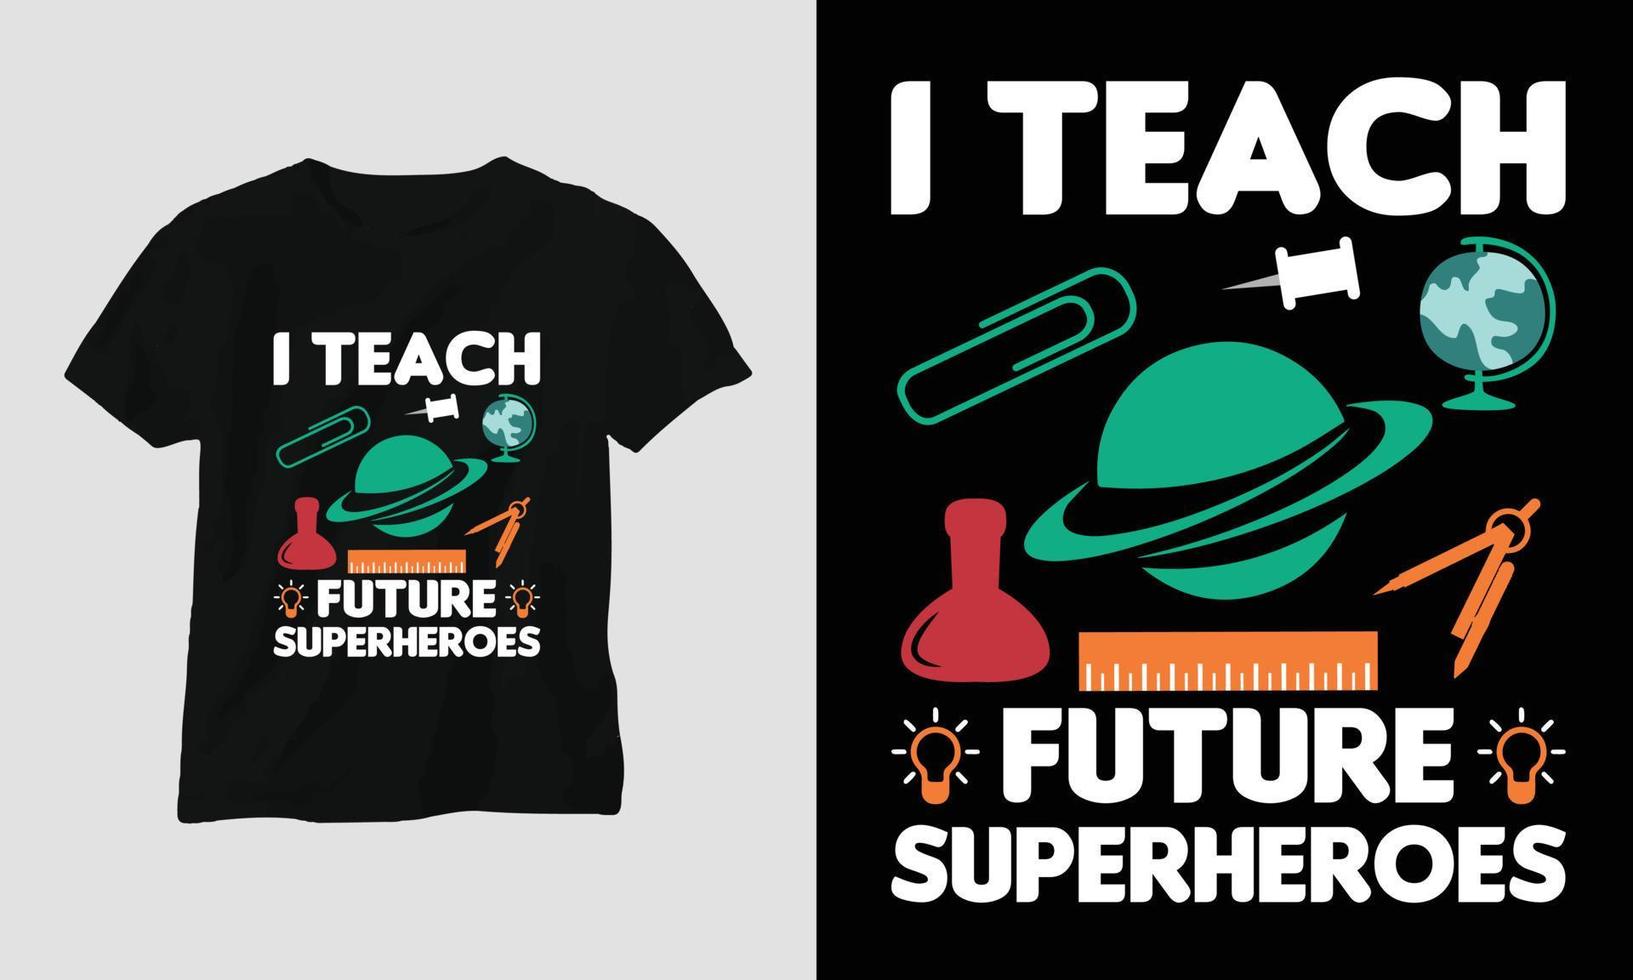 I teach future superheroes - Teachers Day T-shirt vector